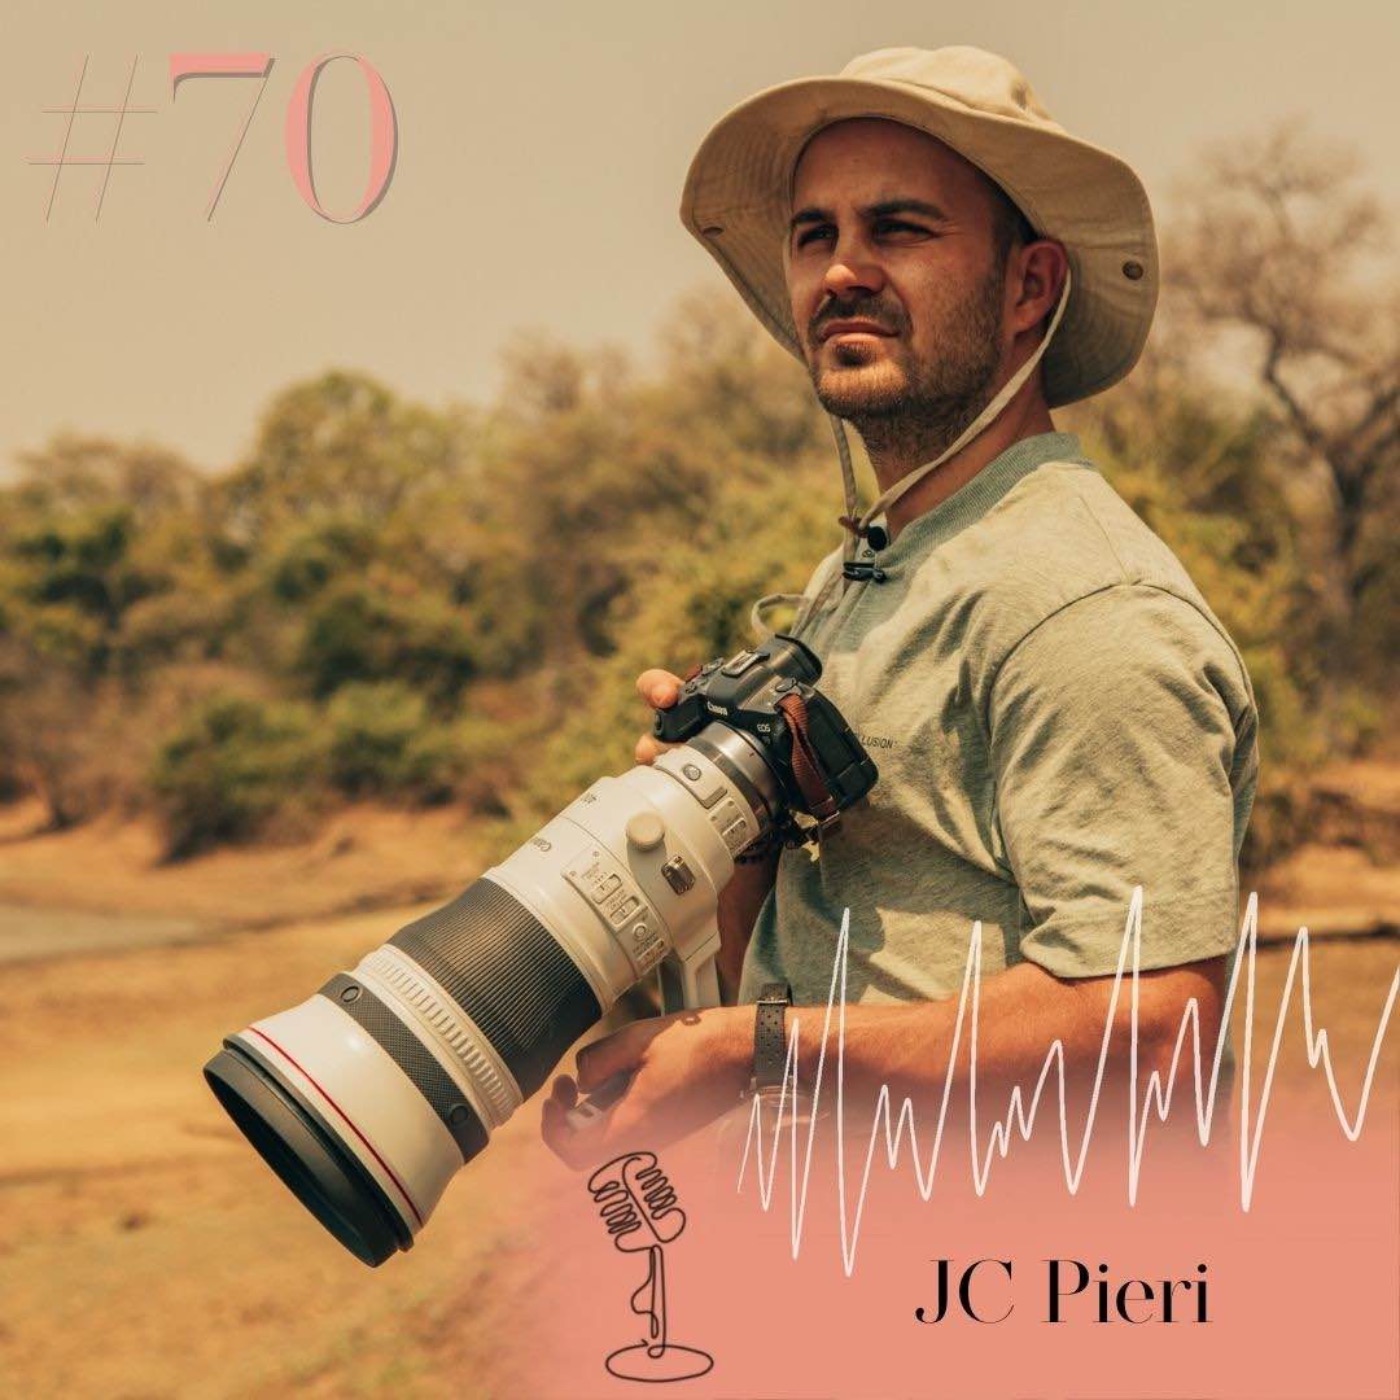 #70 JC Pieri, photographe : transformer sa passion en métier